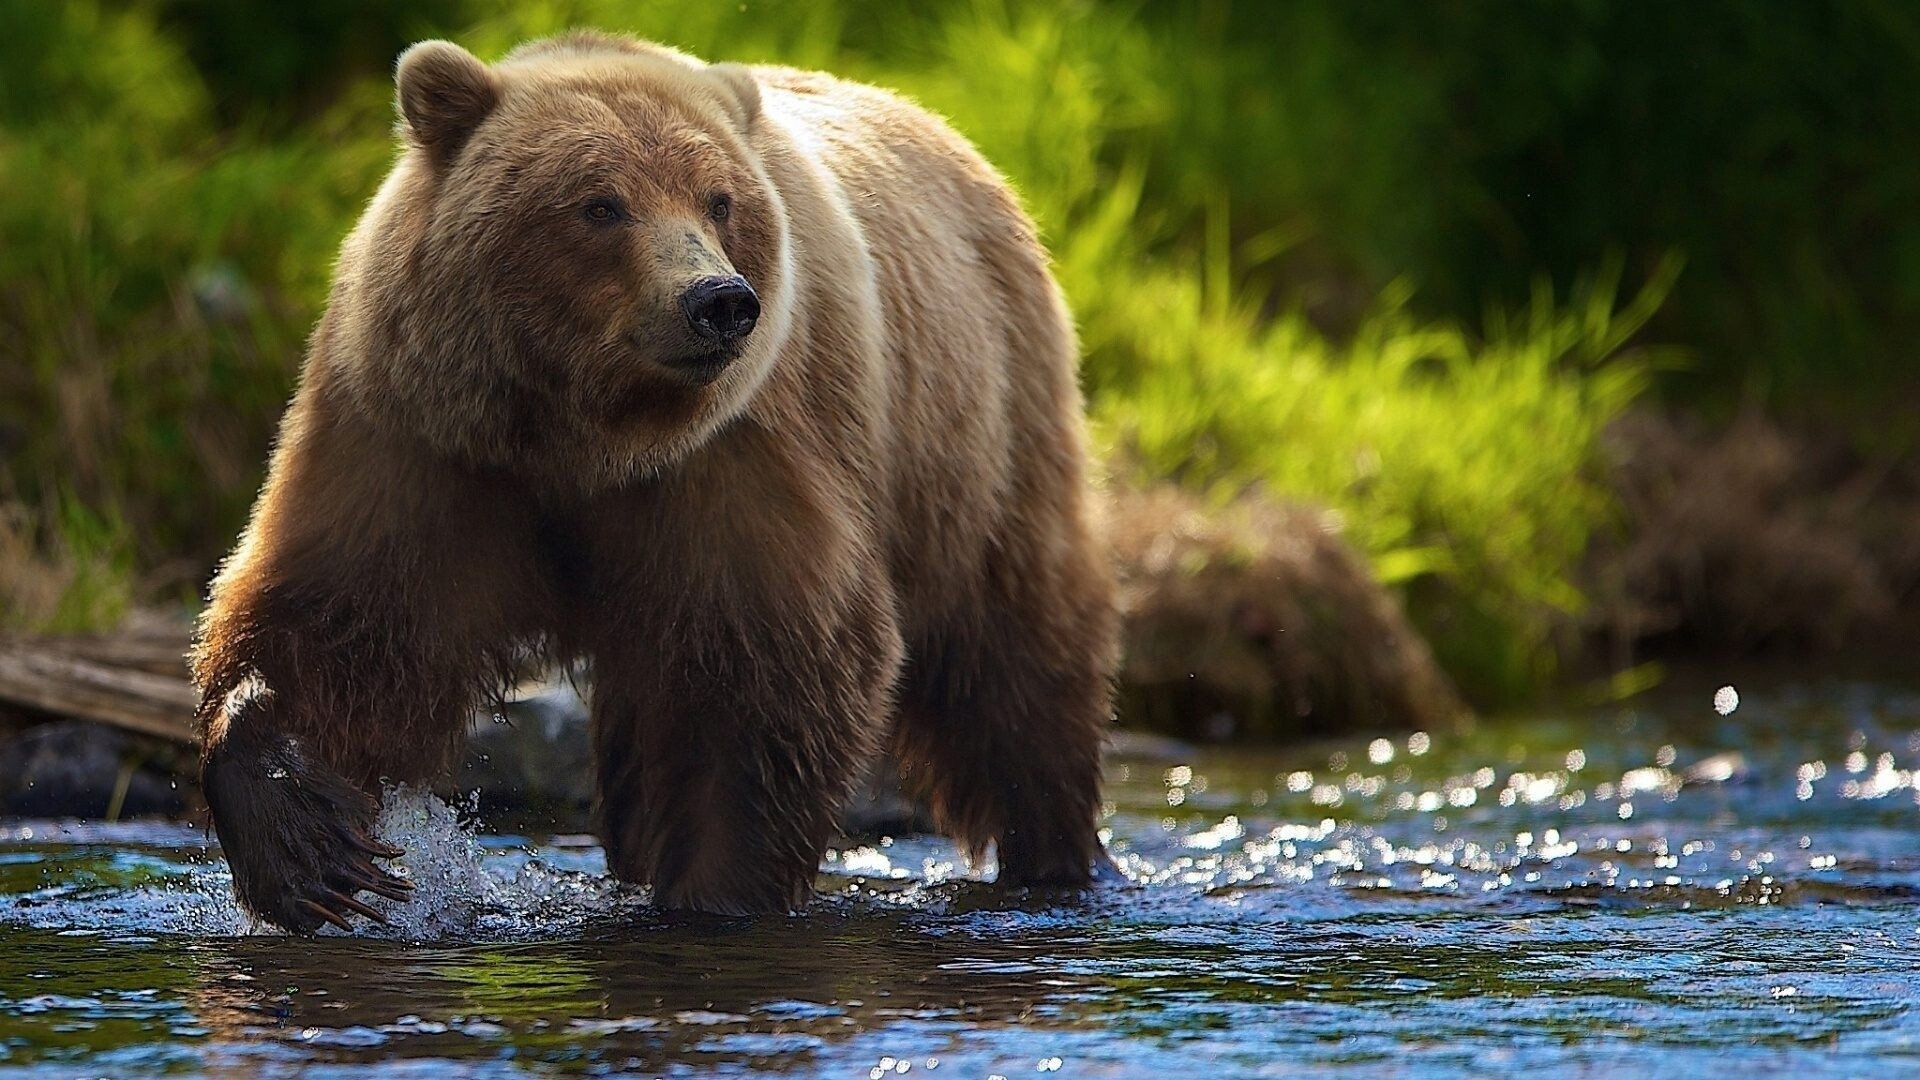 Bear: Ursus arctos, Species found across Eurasia and North America. 1920x1080 Full HD Background.